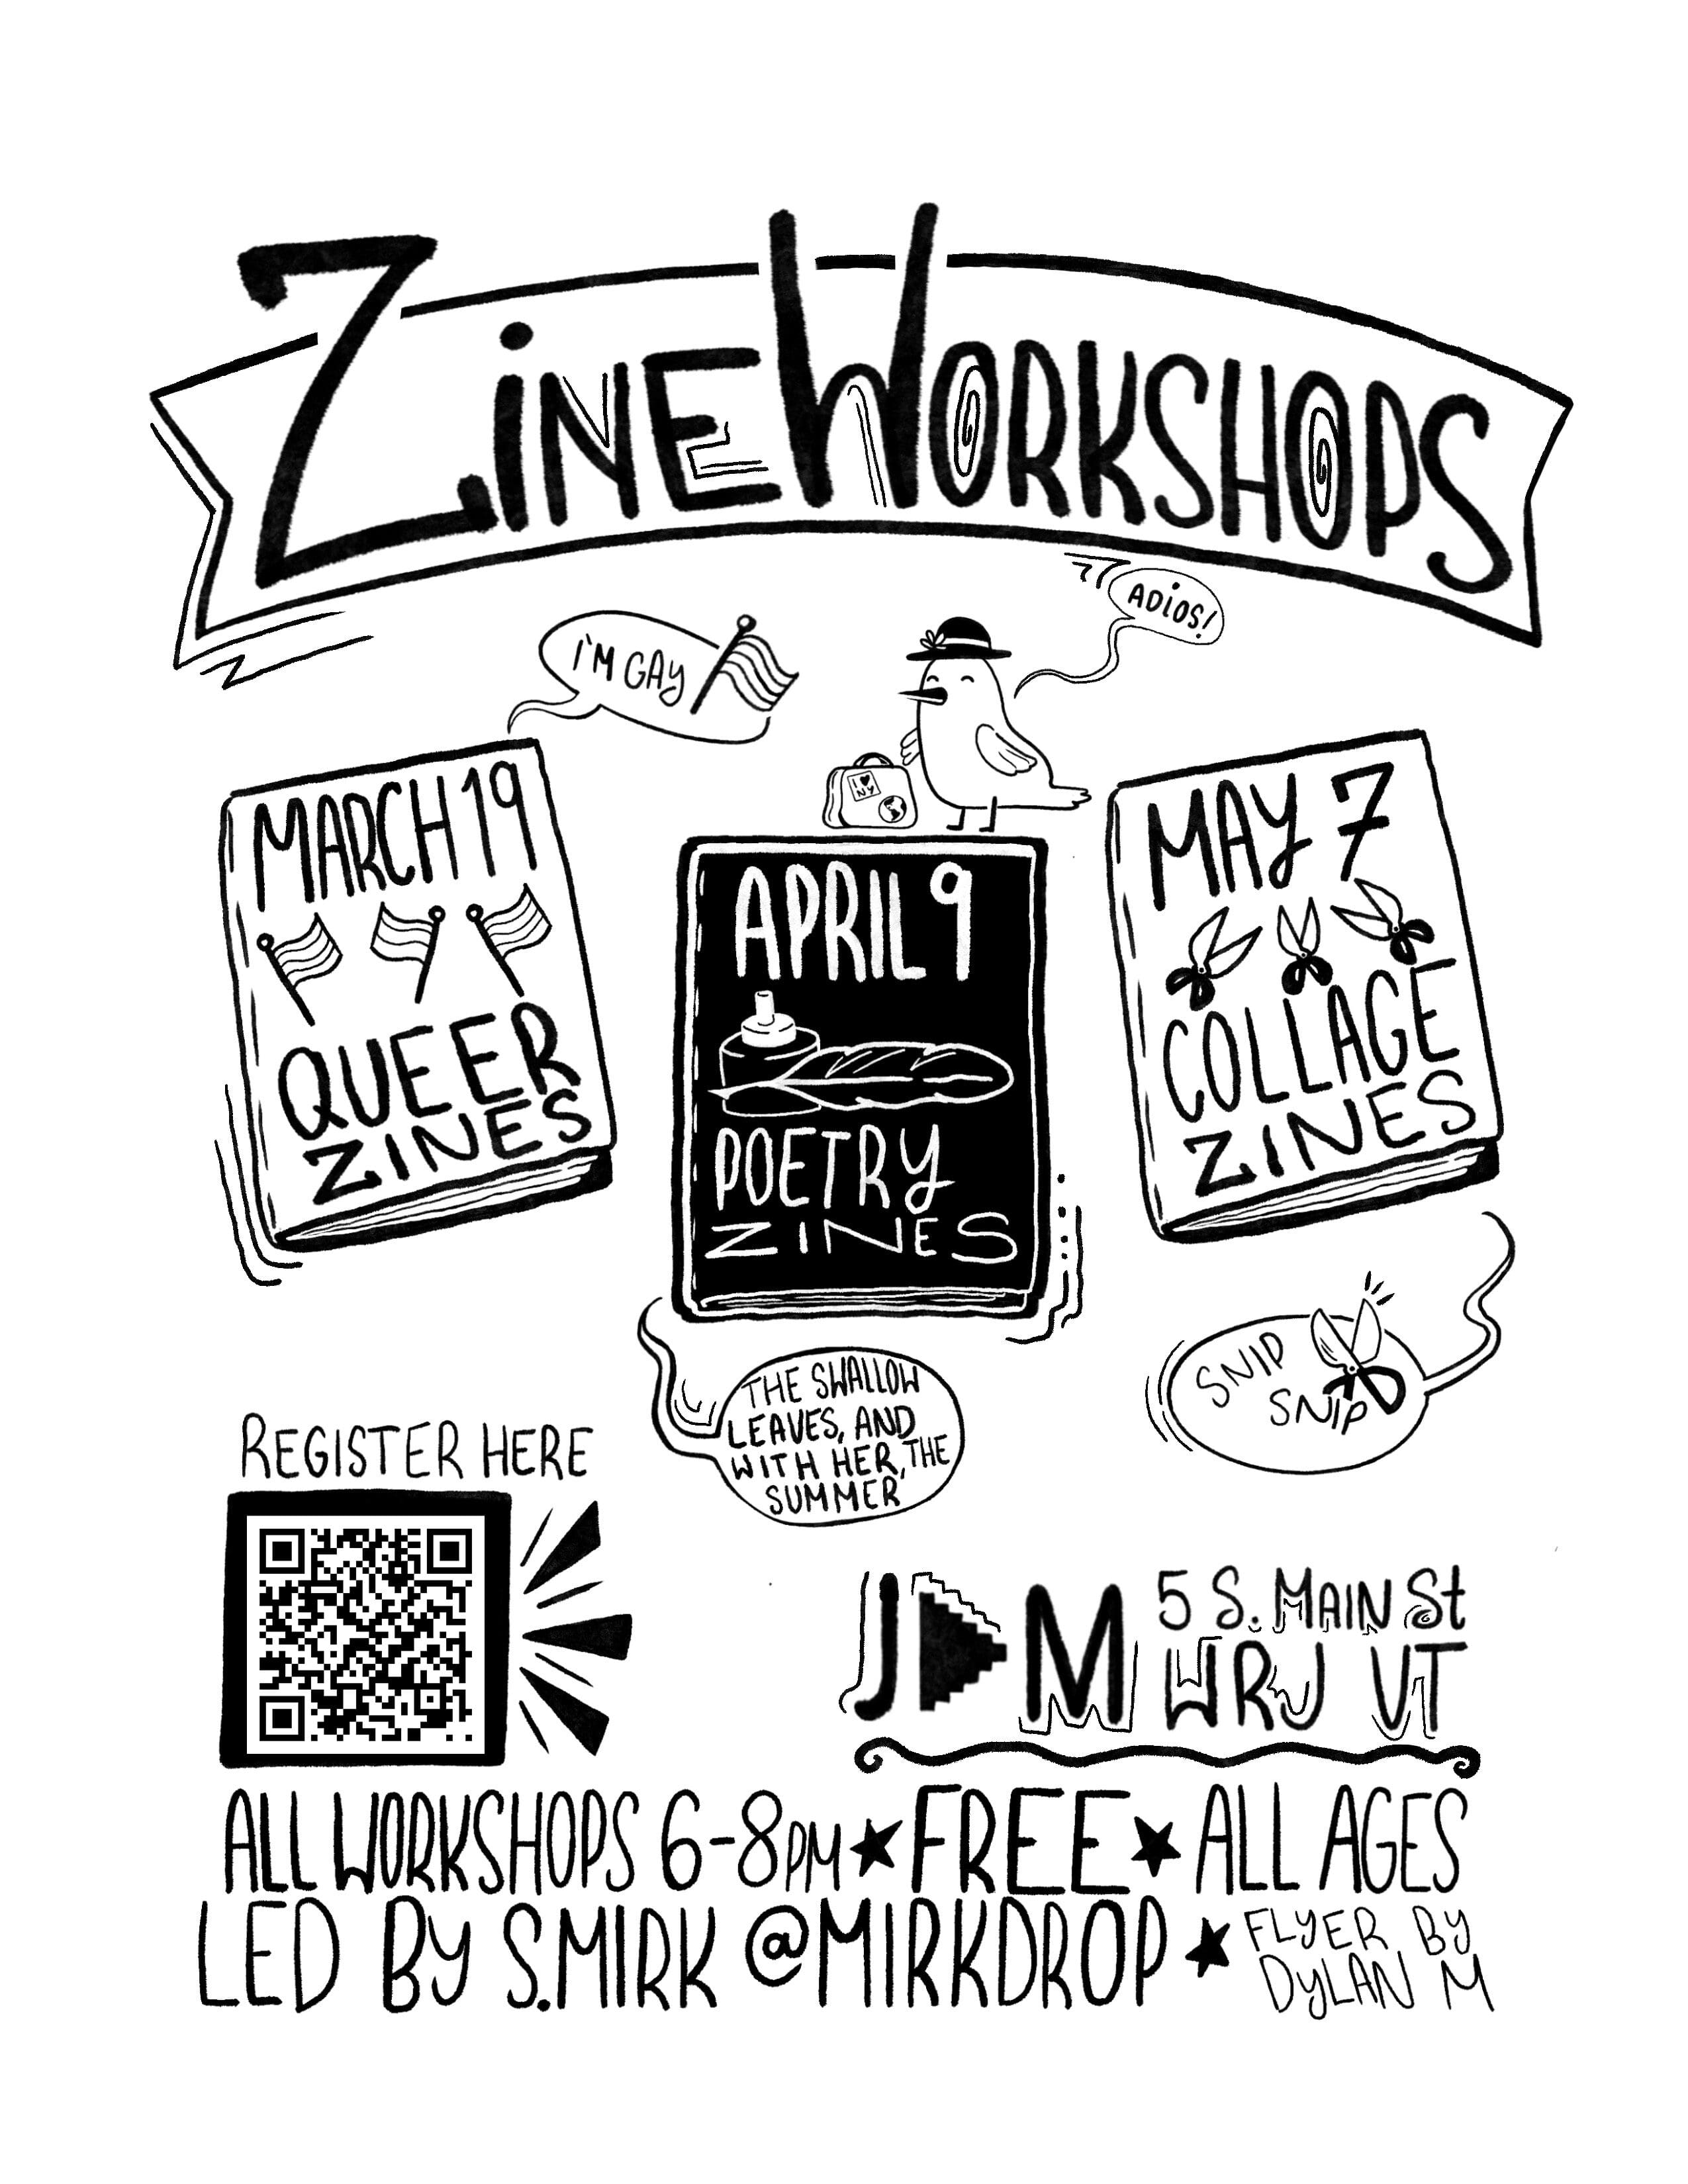 zine workshops flyer